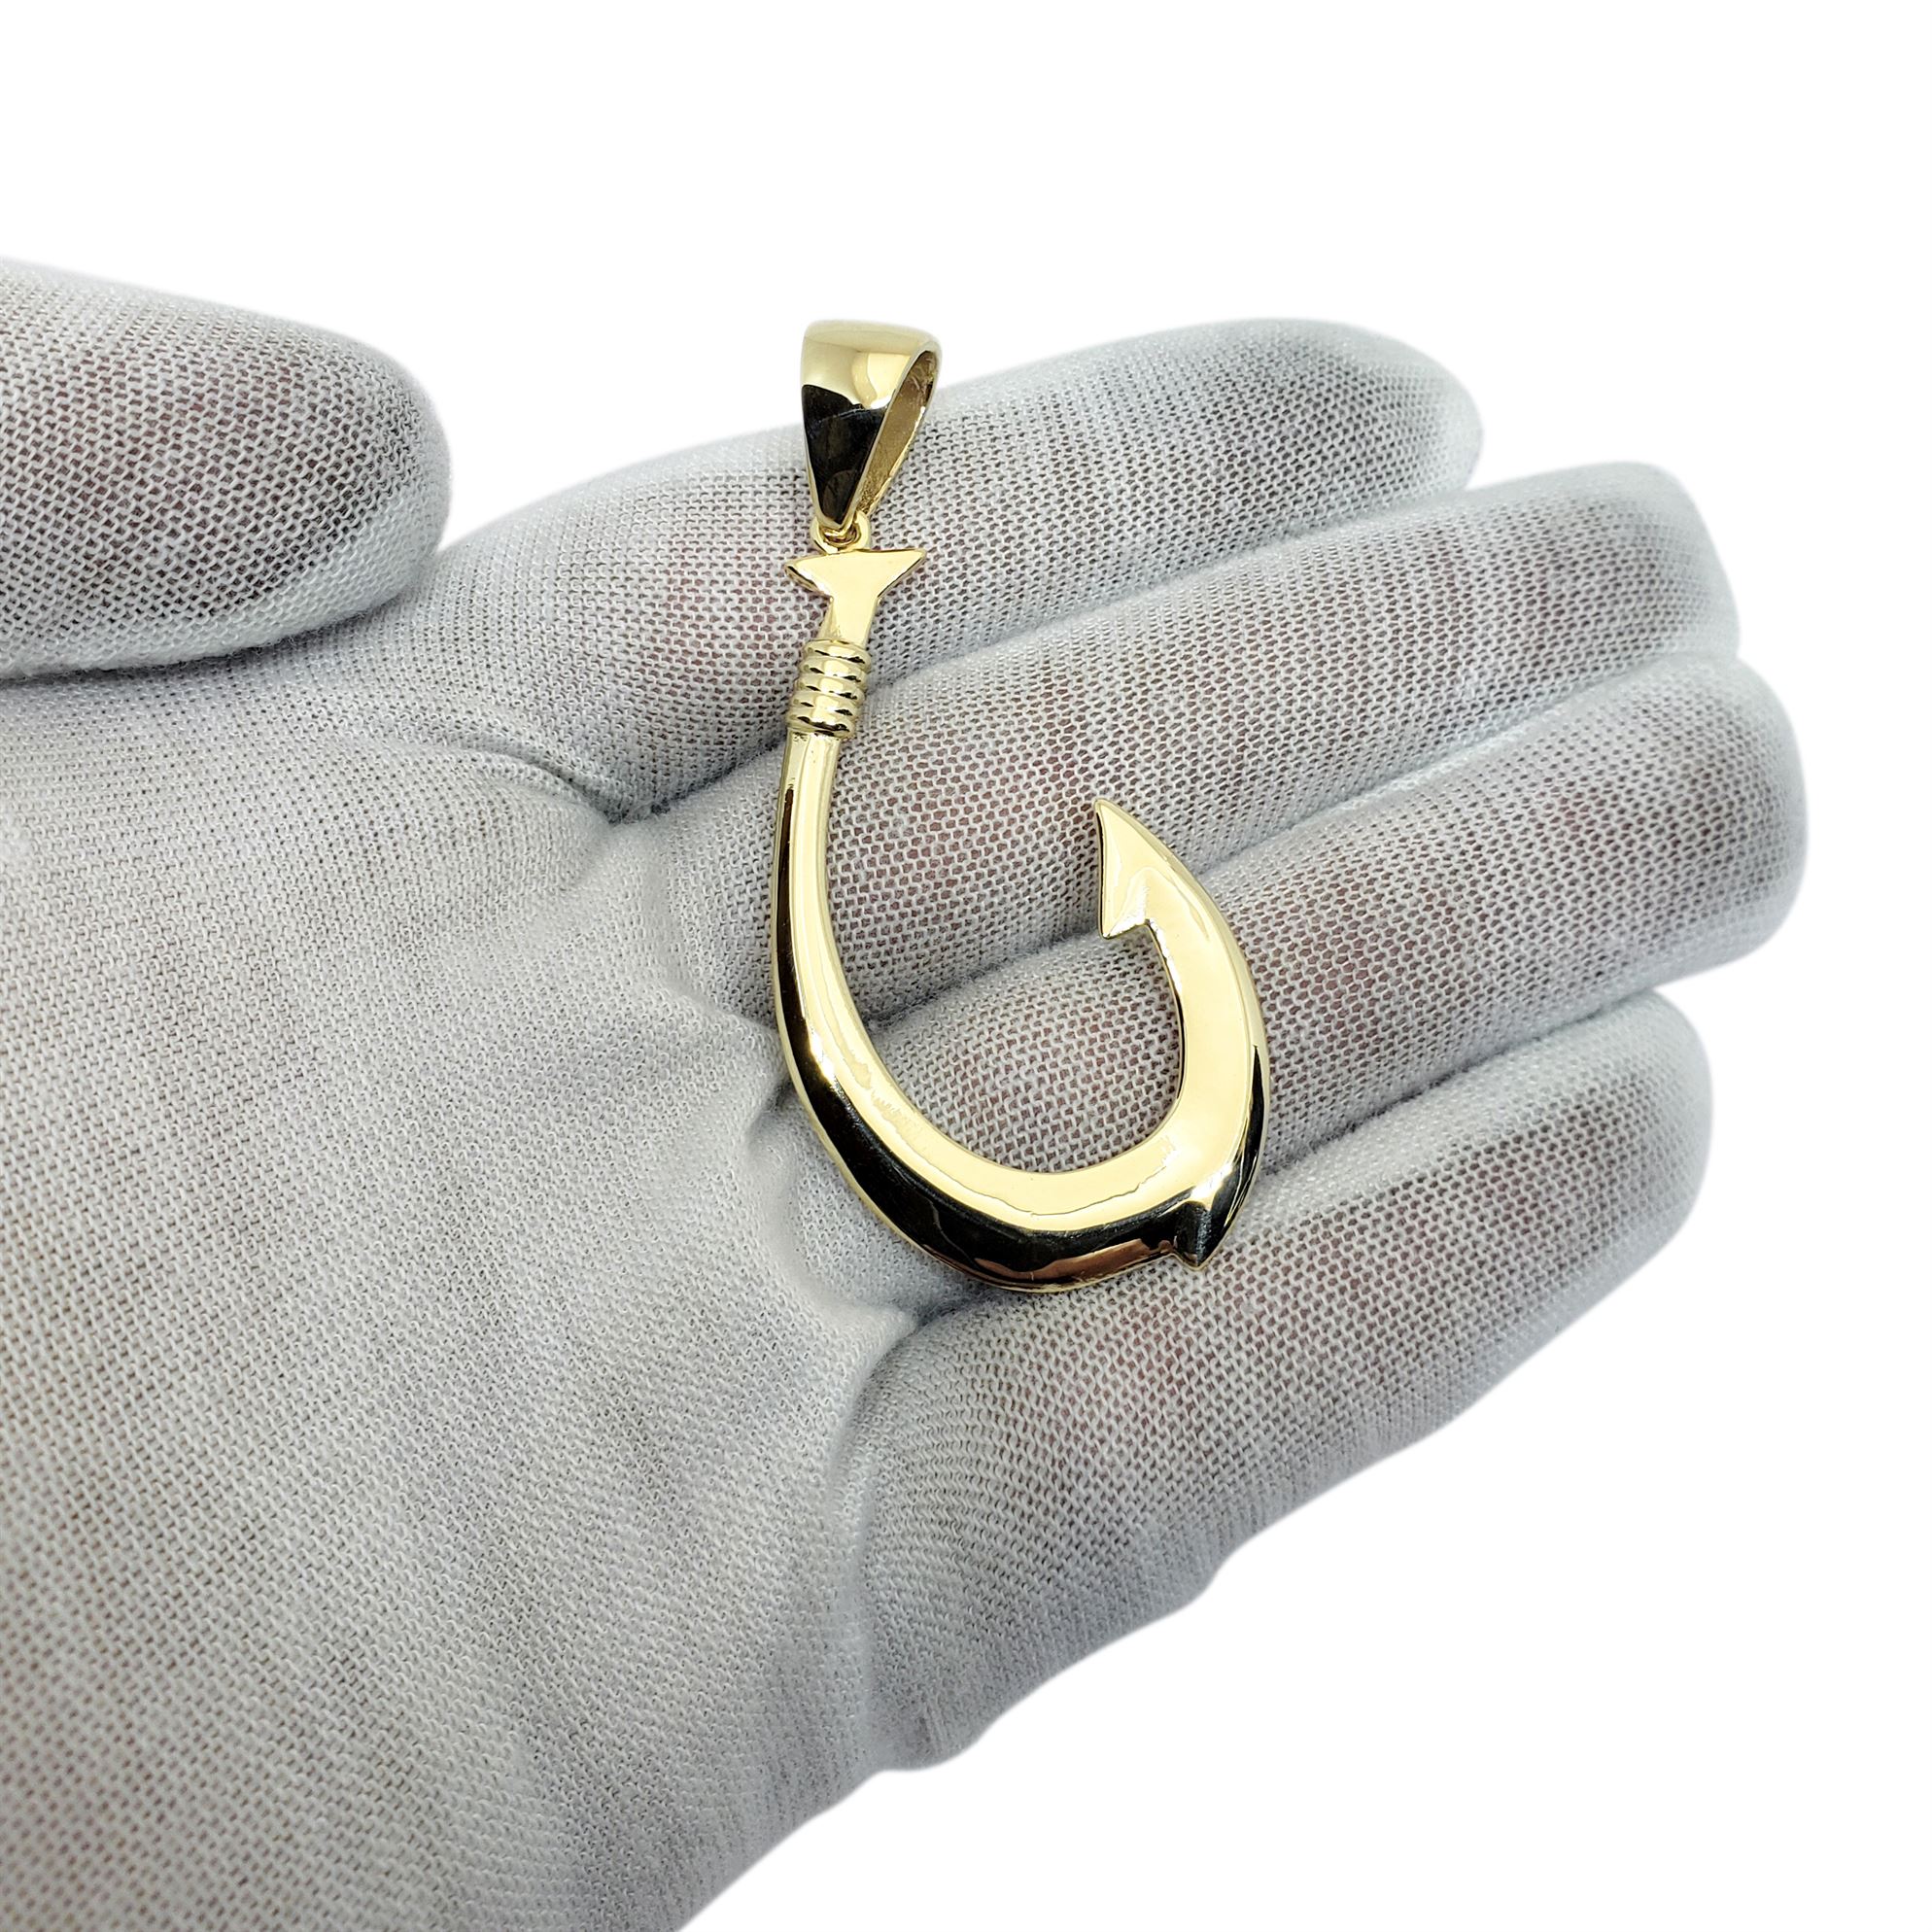 Solid 14K Yellow Gold Fish Hook Pendant, large, 2 1/2 long, 8.5 grams,  Hawaiian - Jahda Jewelry